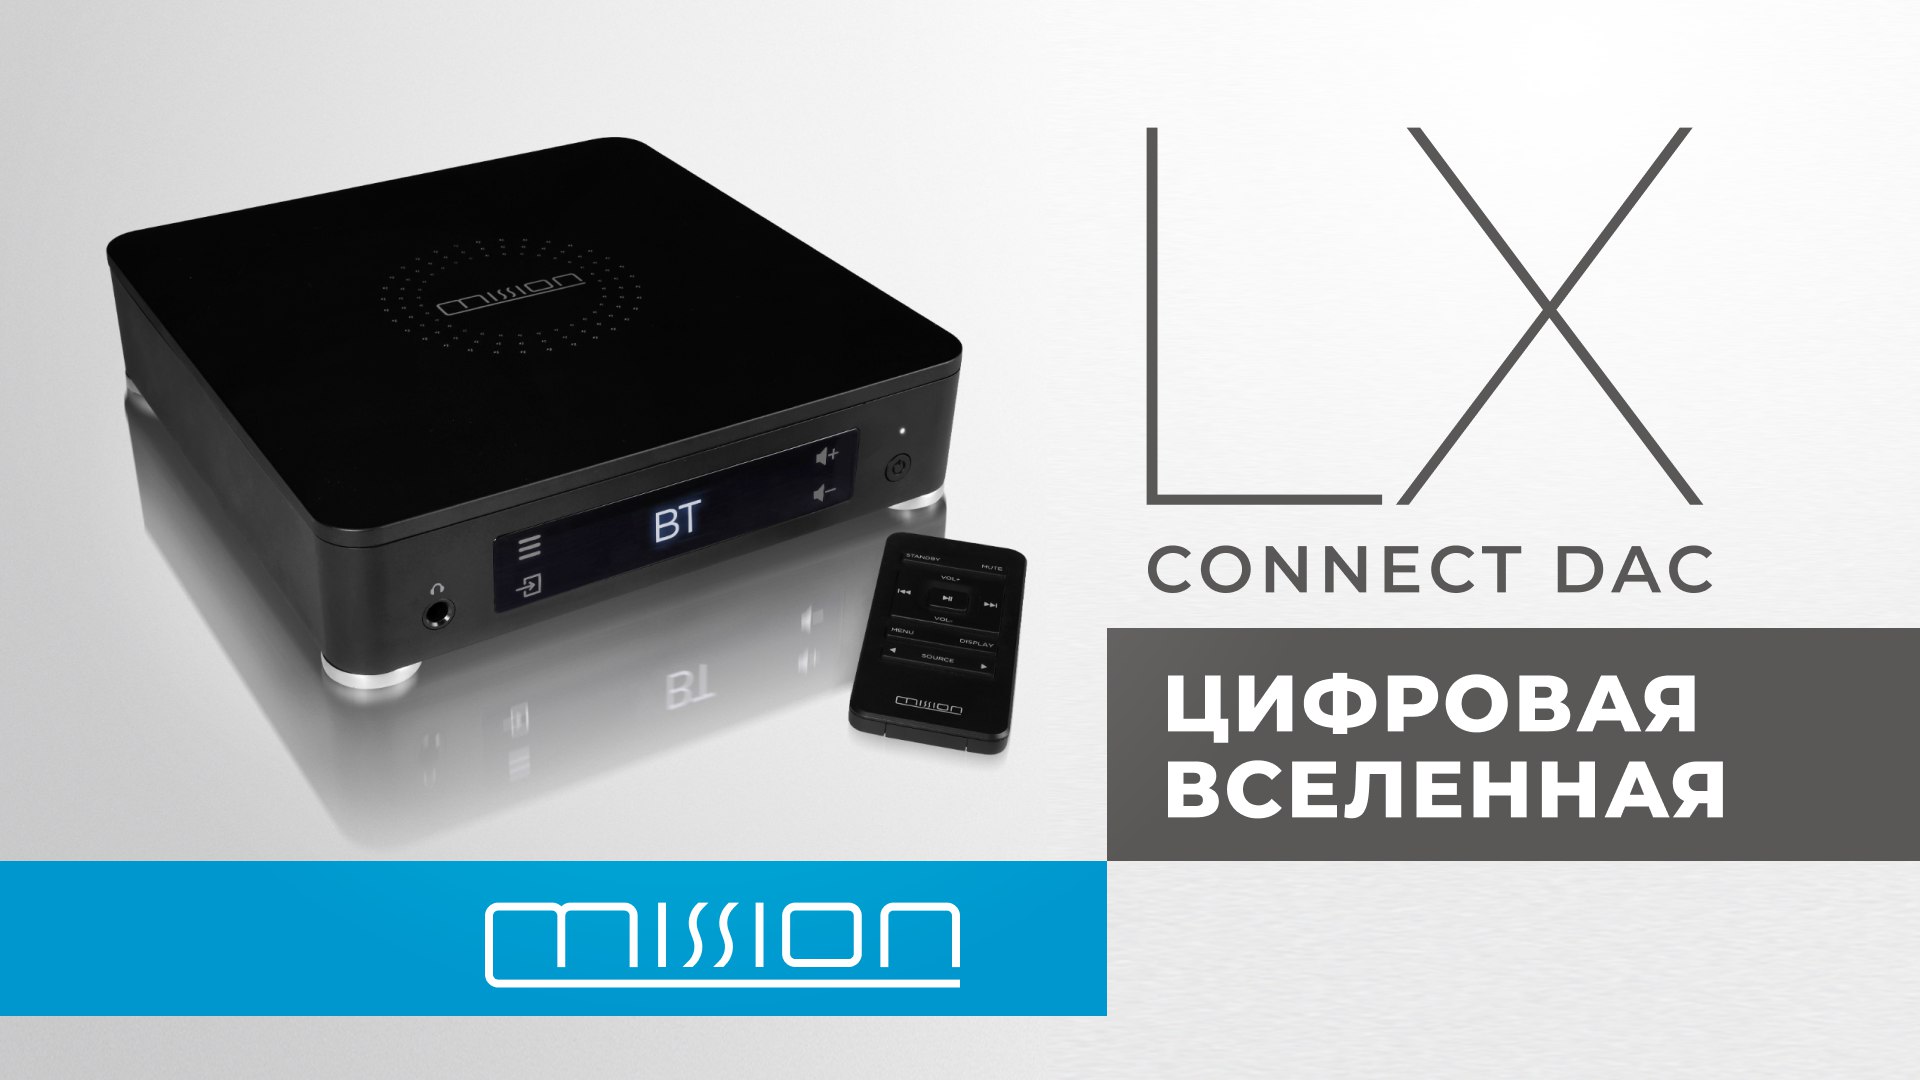 Mission LX Connect DAC | Цифровая вселенная!